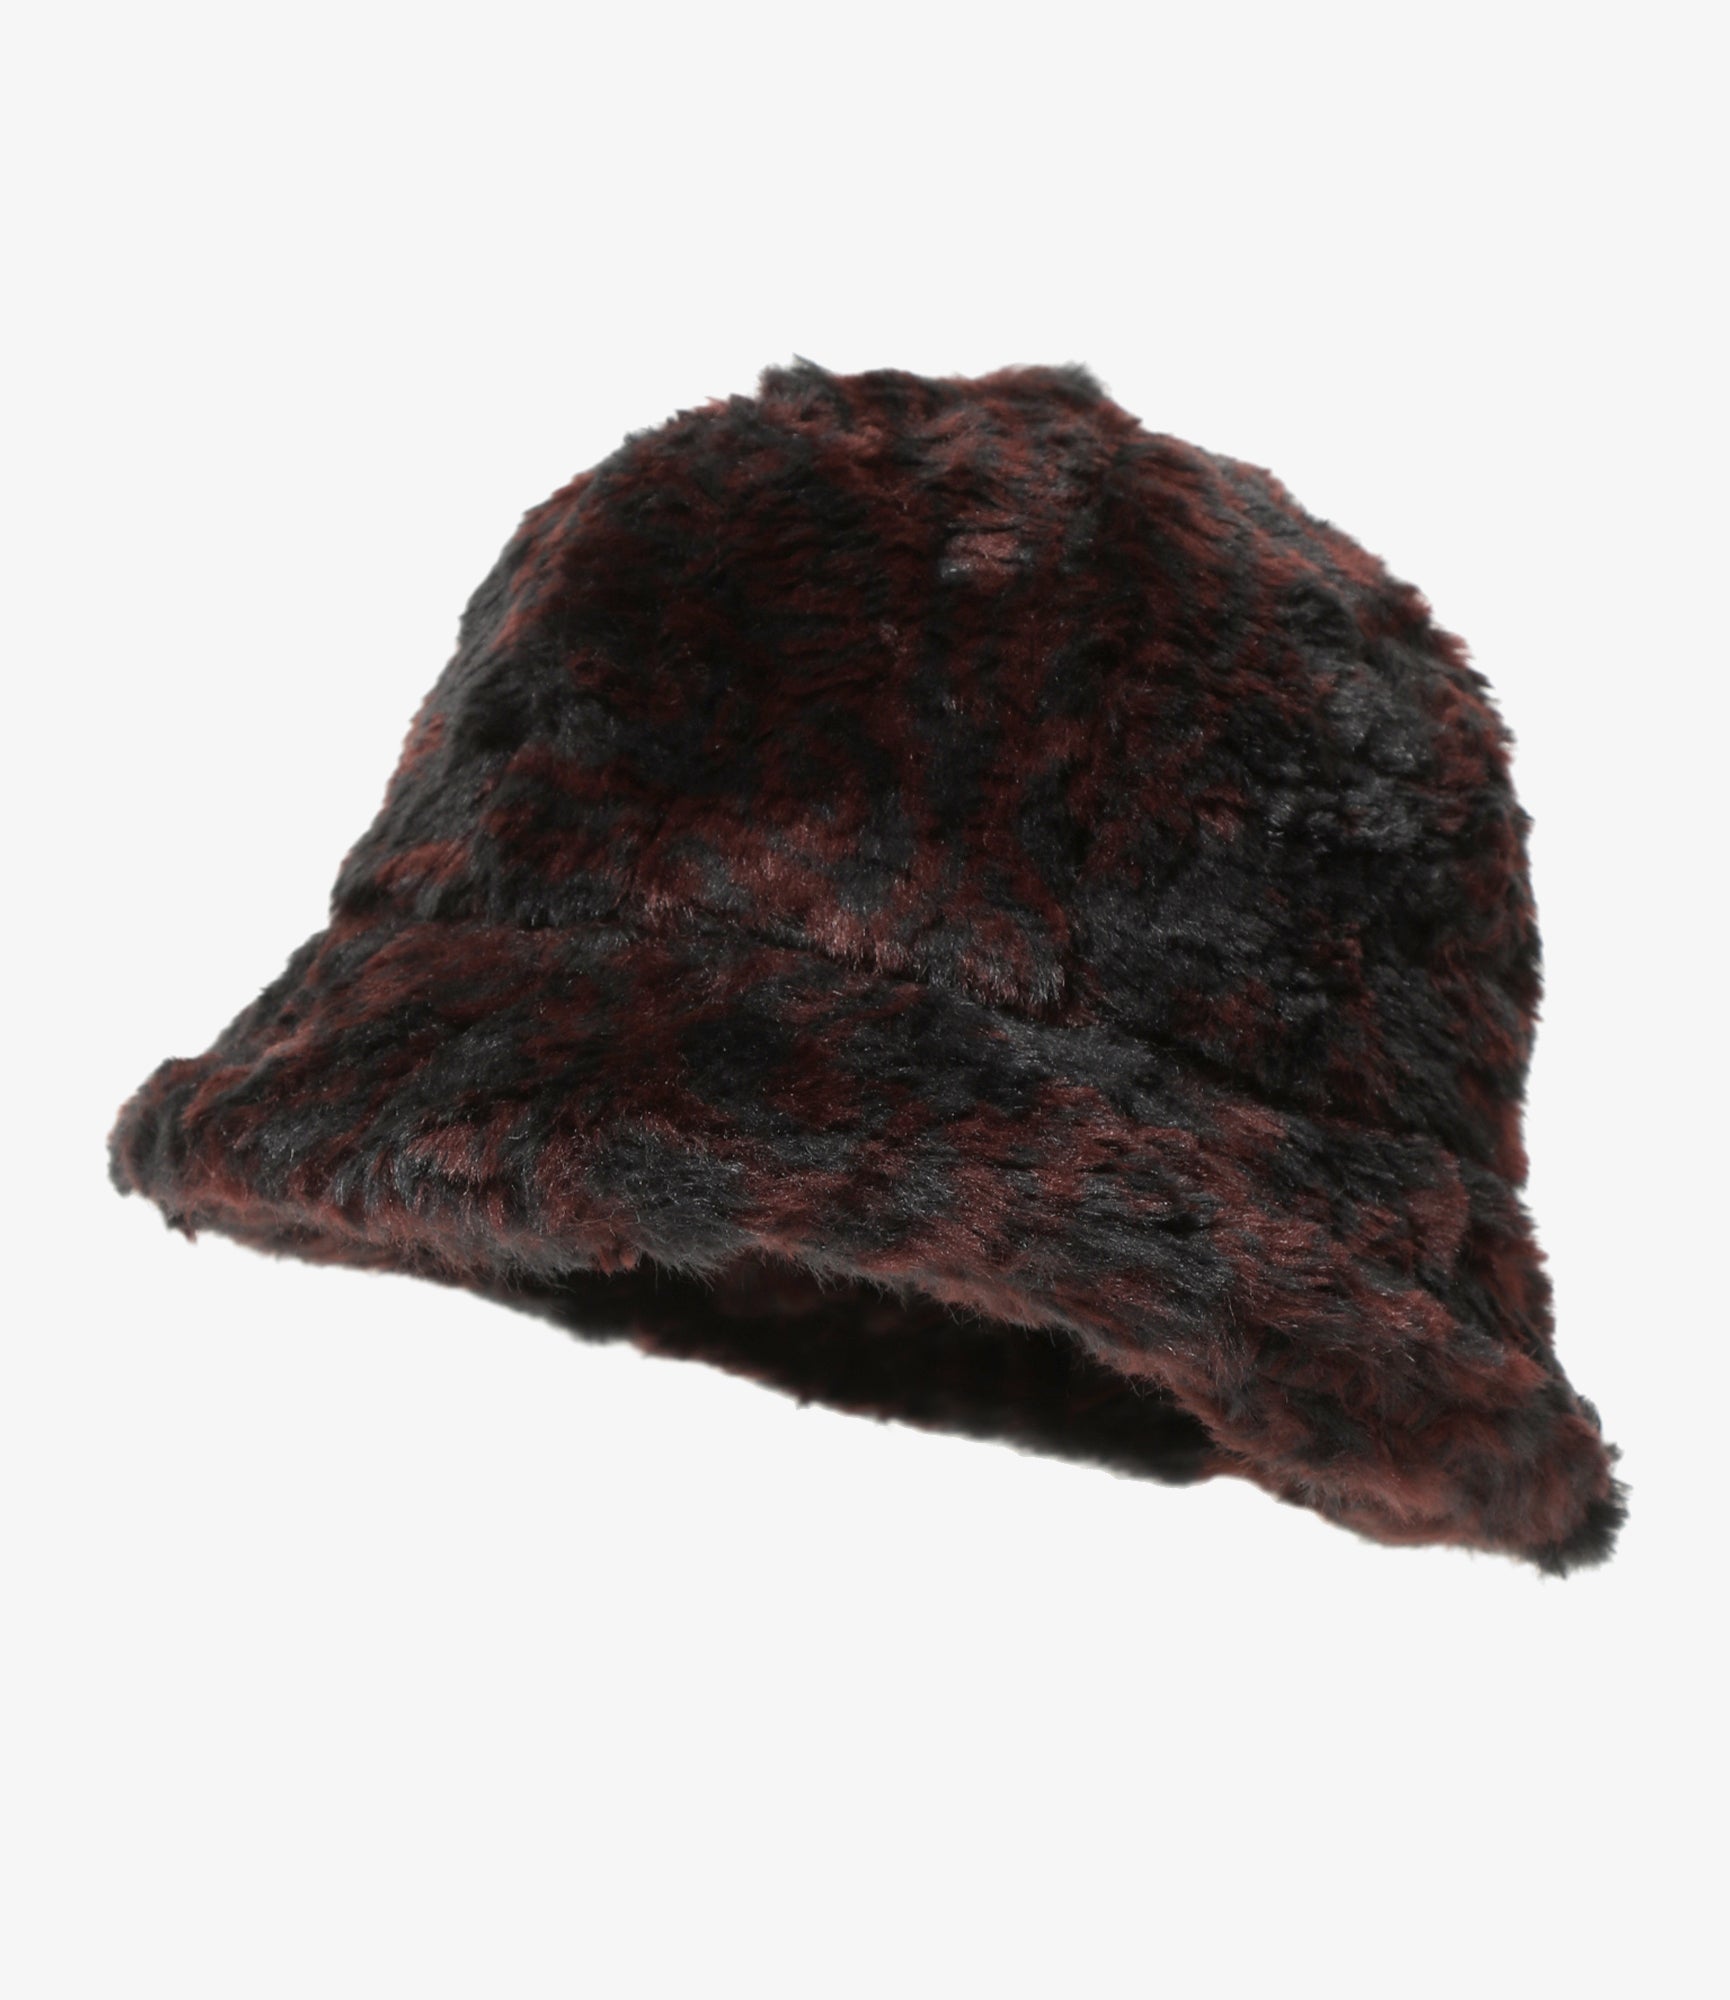 Bermuda Hat - Navy / Bordeaux - Acrylic Fur / Paisley